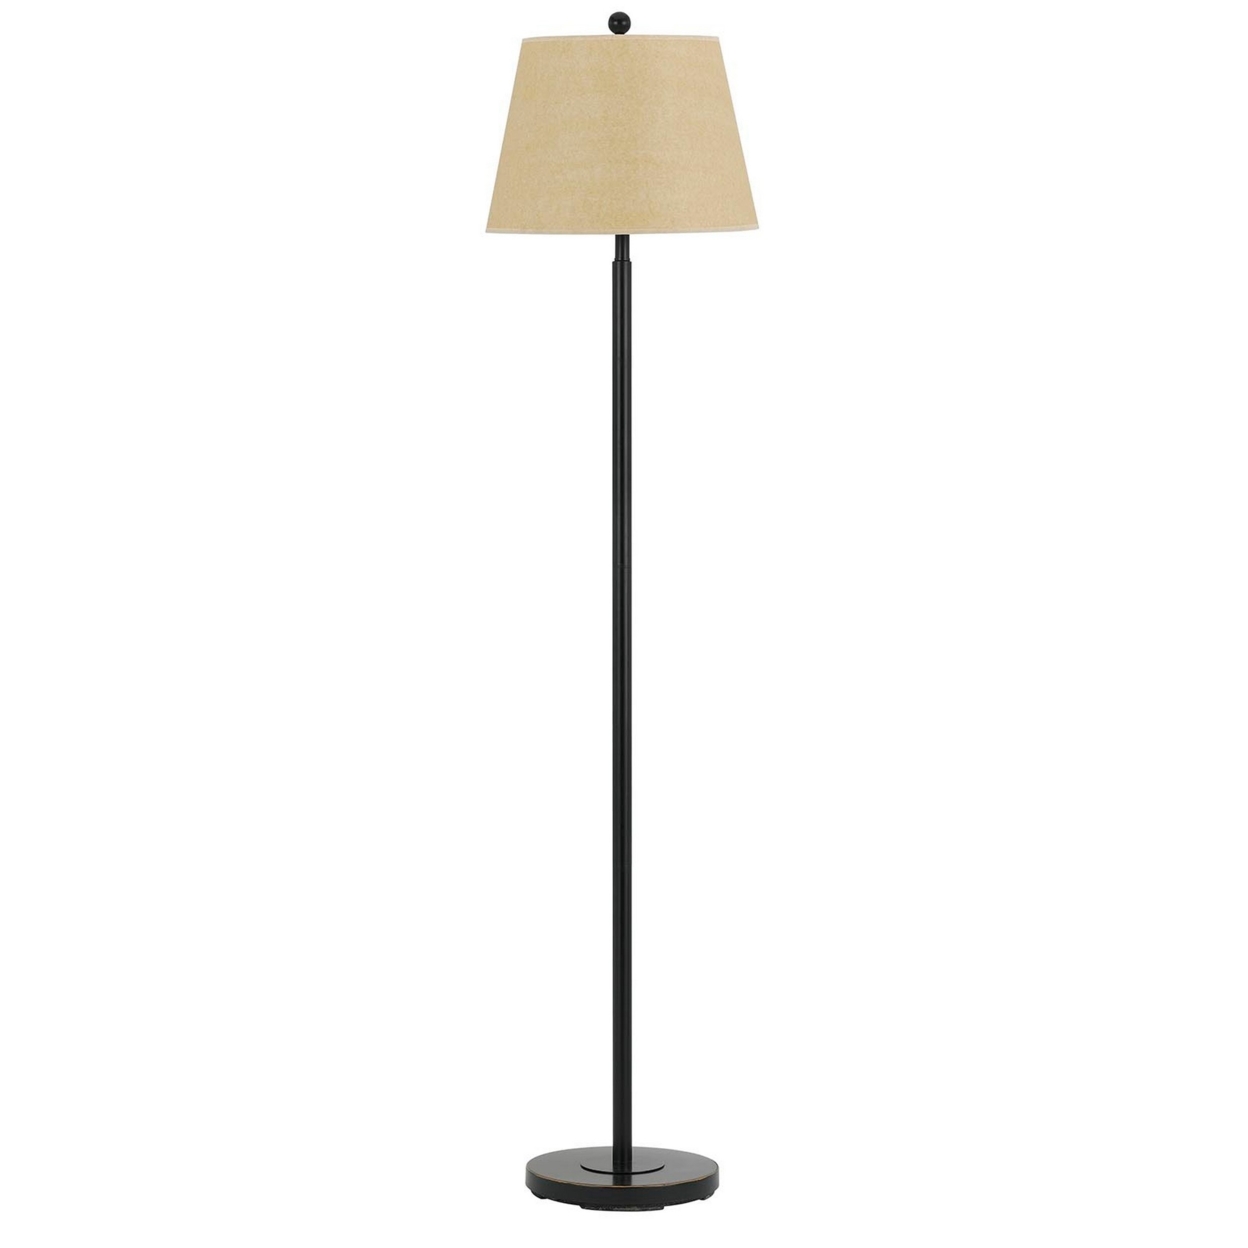 Metal Round 3 Way Floor Lamp With Spider Type Shade, Dark Bronze- Saltoro Sherpi